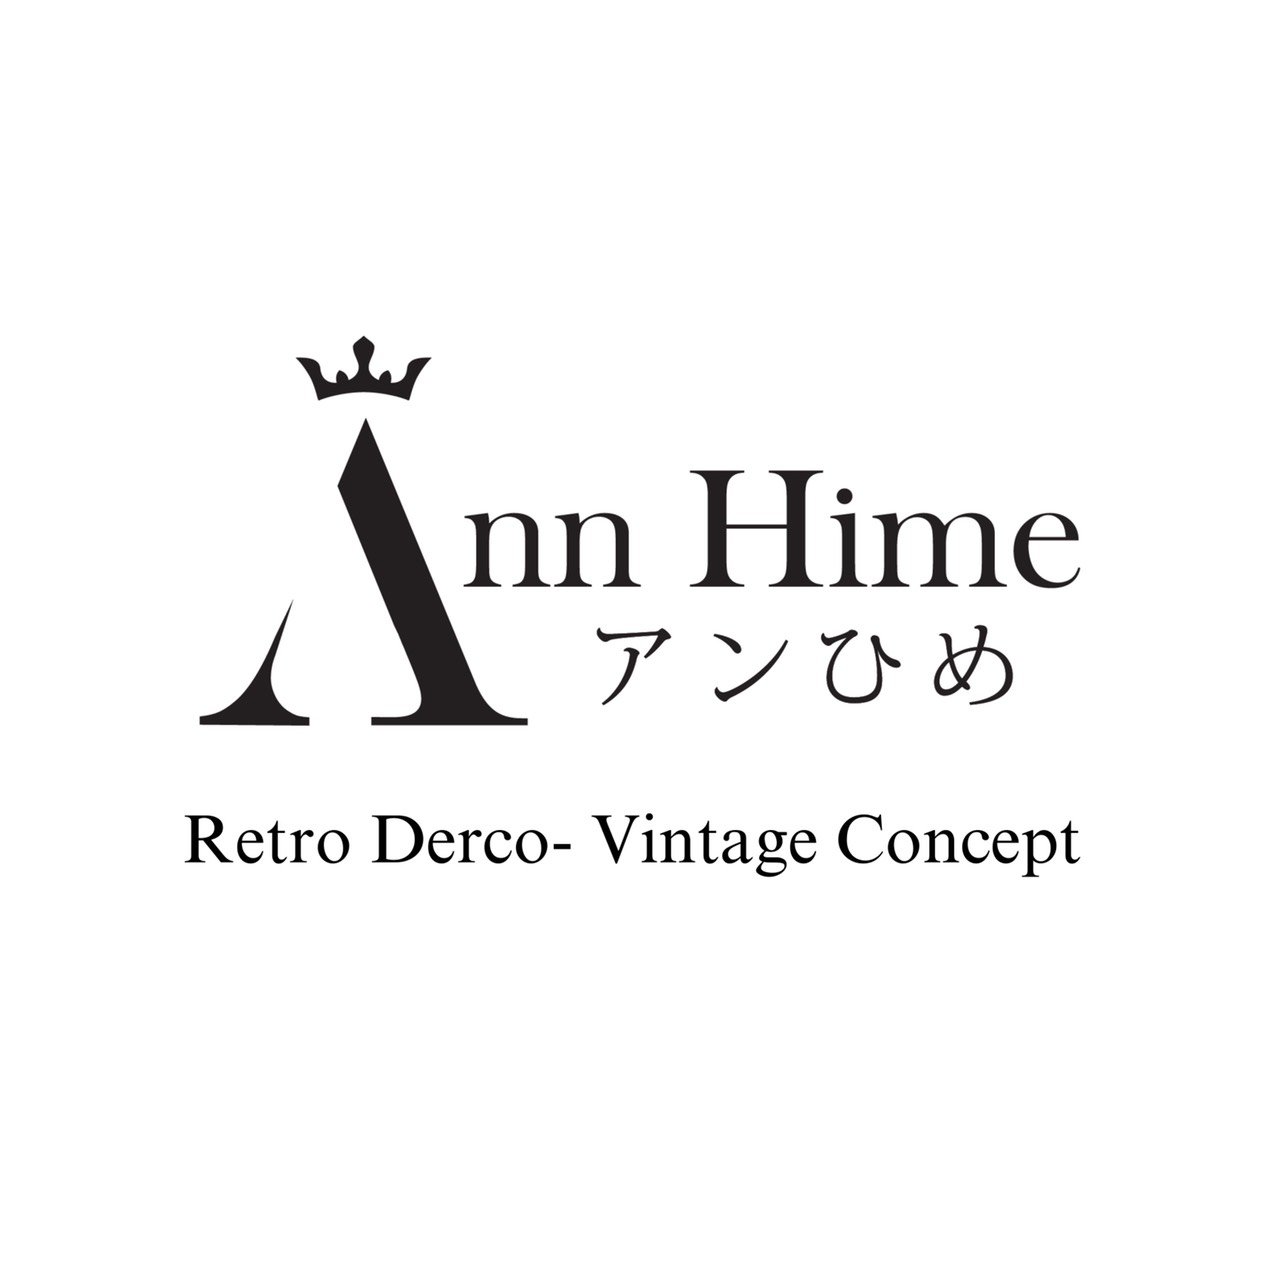 Ann Hime Studio